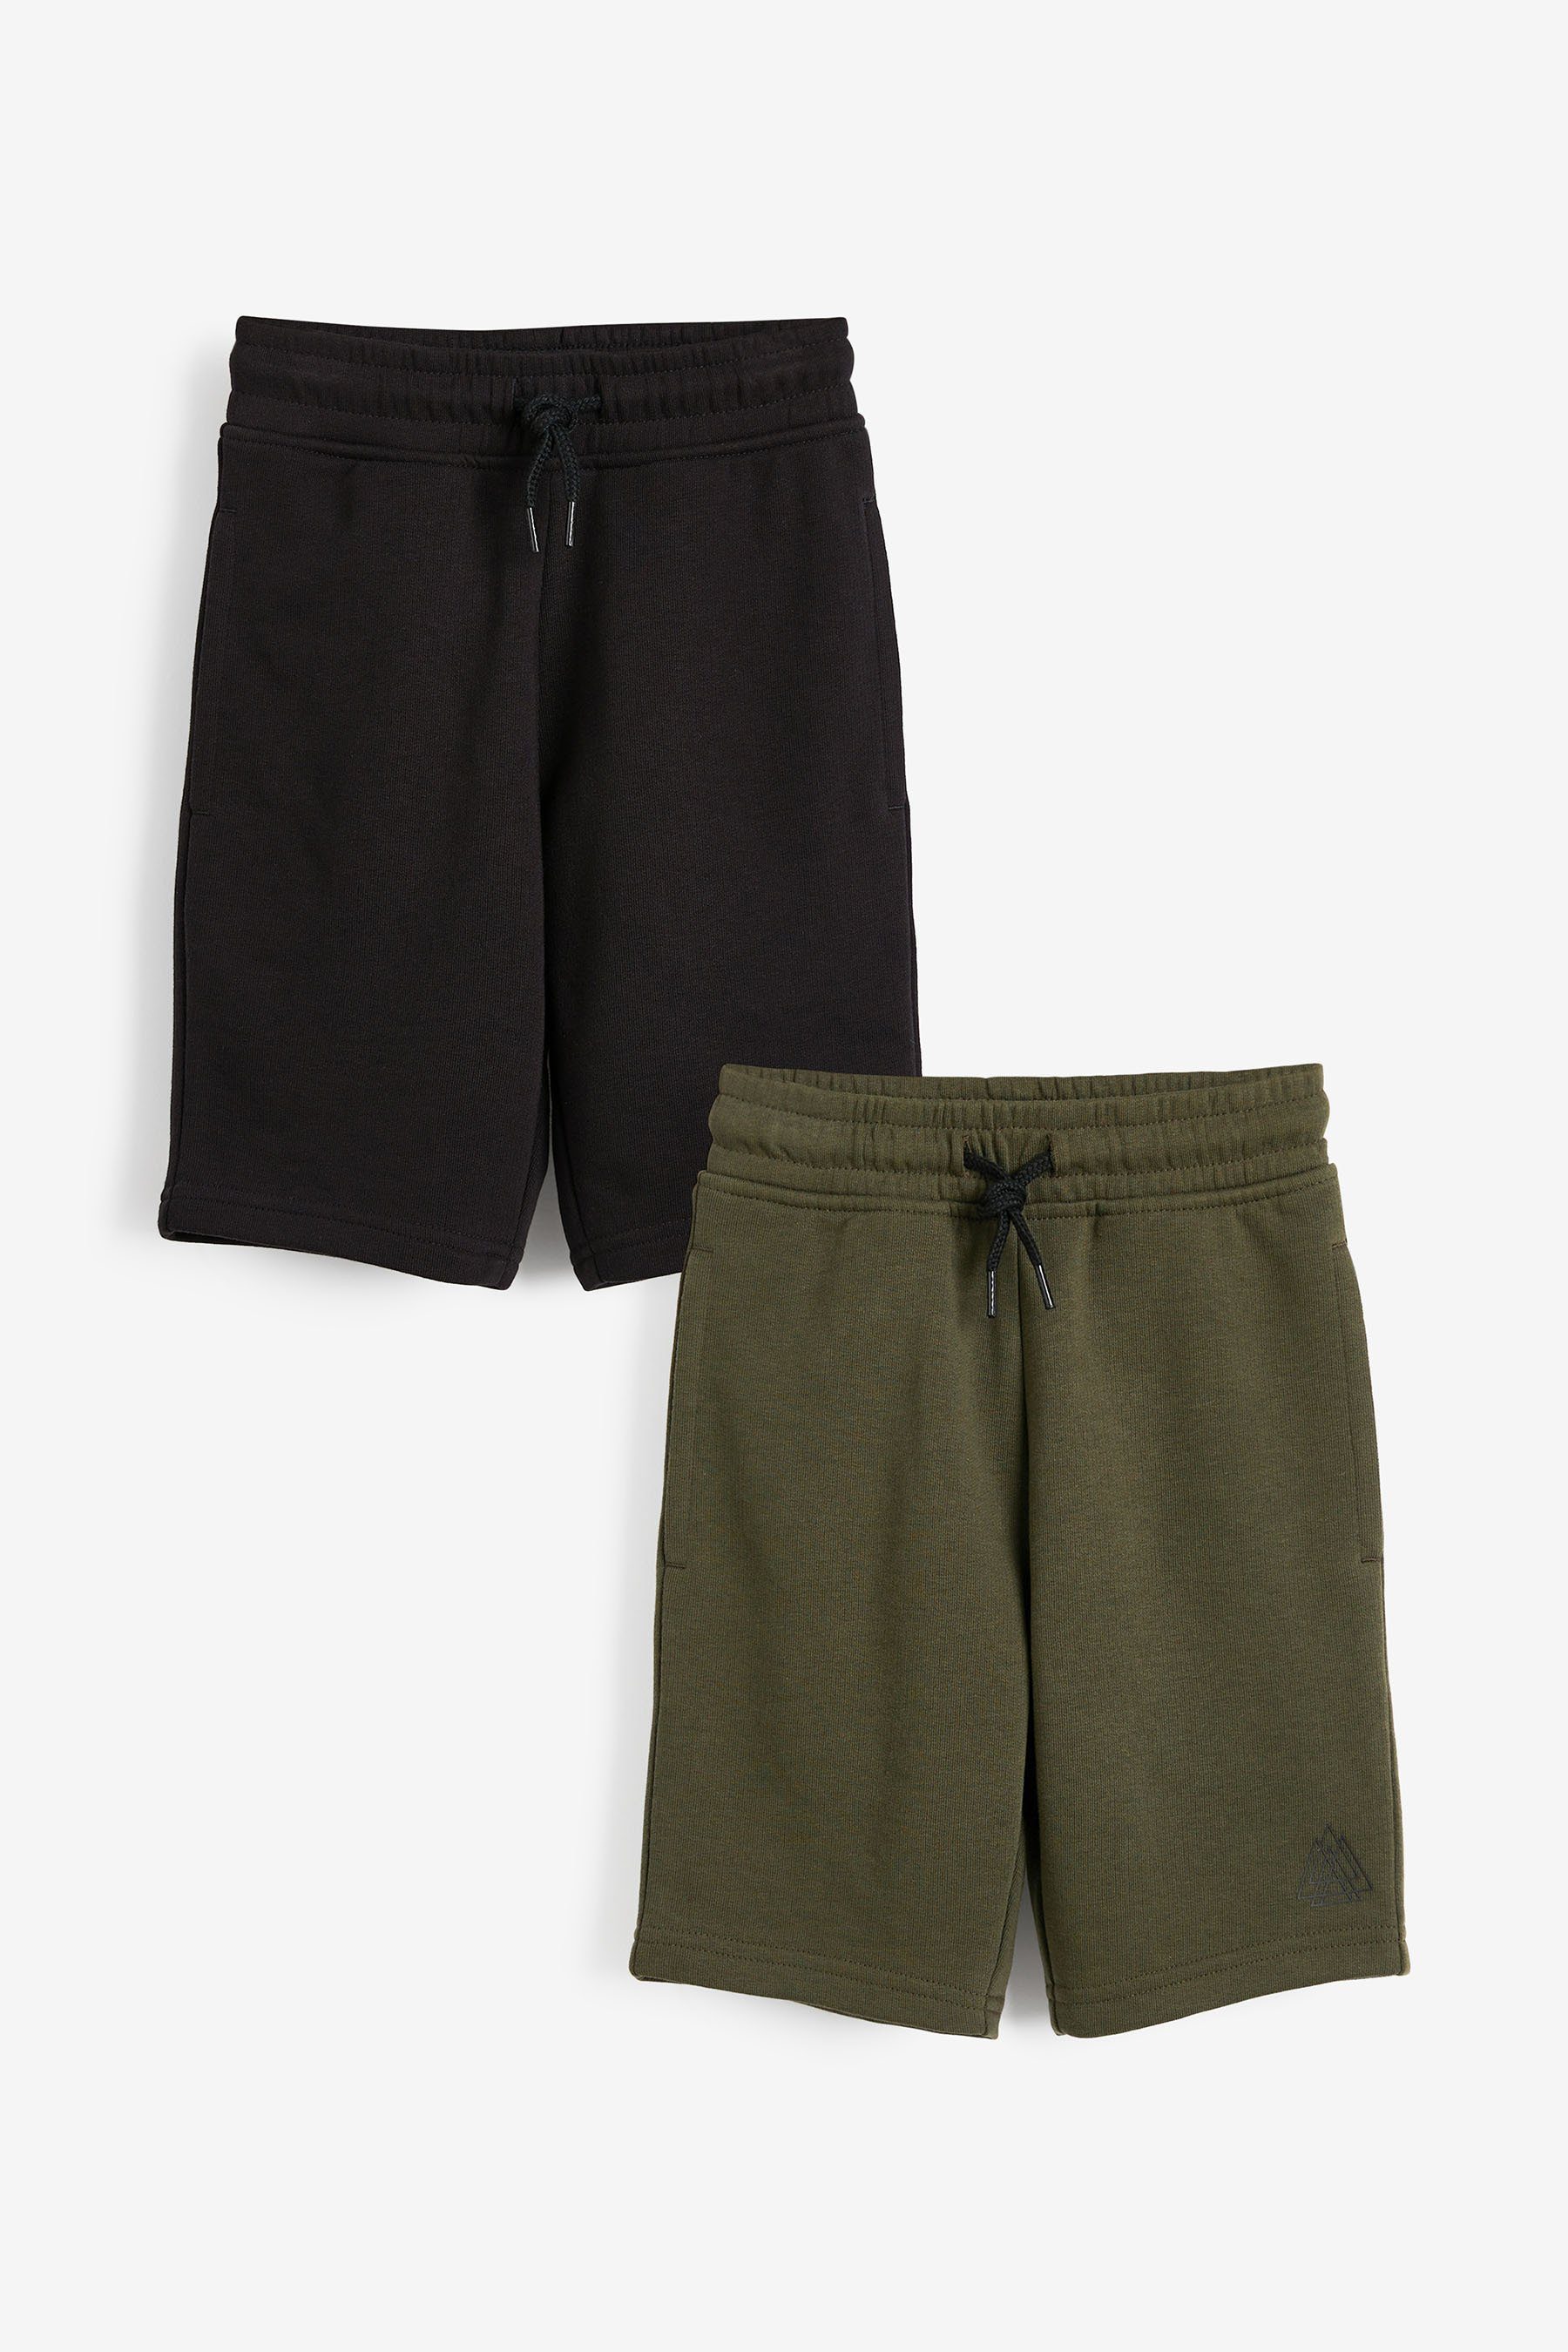 Next Black/Green im Sweatshorts Shorts 2er-Pack (2-tlg)